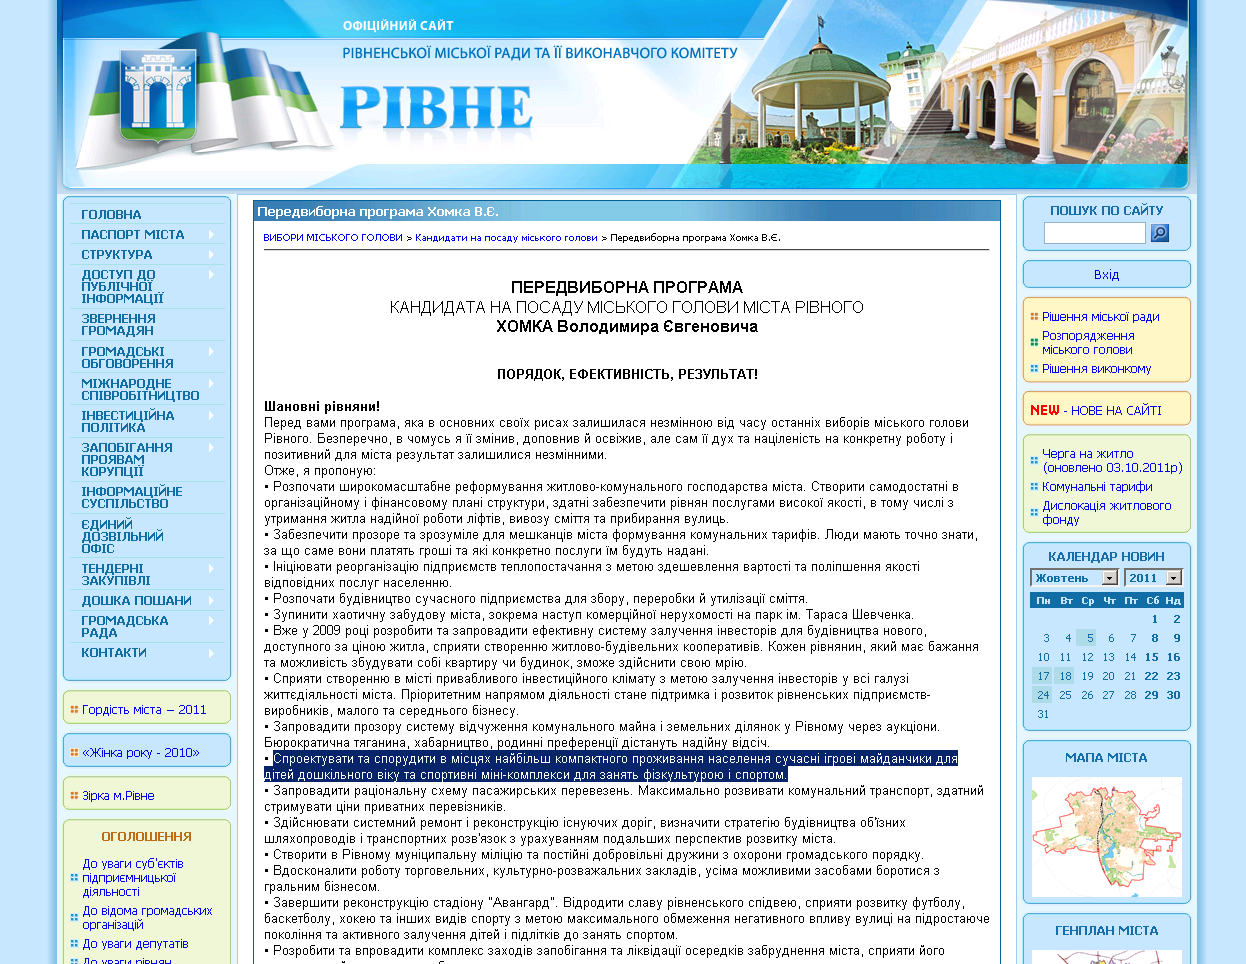 http://www.city-adm.rv.ua/RivnePortal/ukr/Elections_of_the_mayor_Candidates_homko.aspx